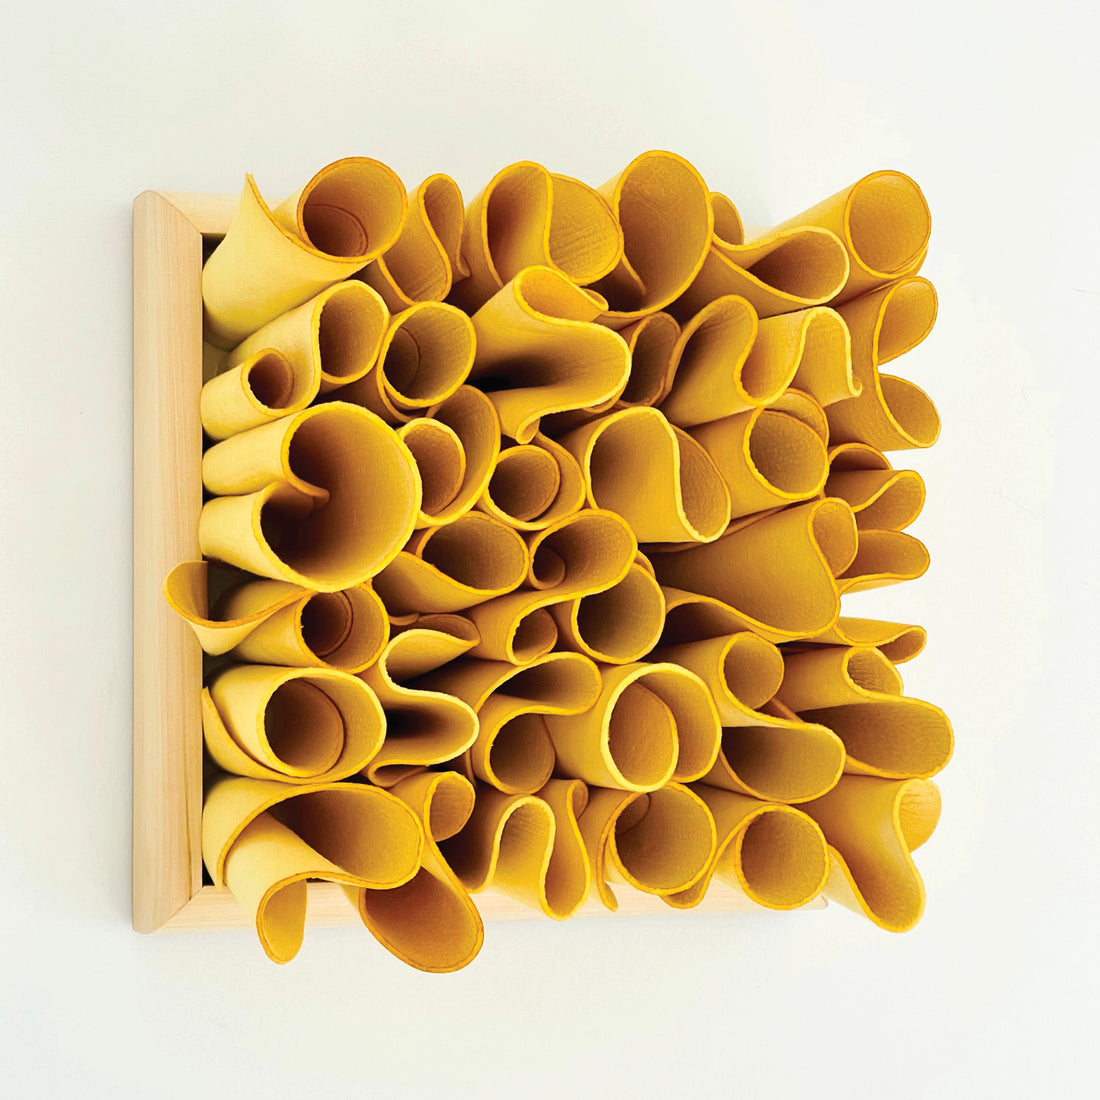 Rob Sirignano "lemon" felt box abstract art Canadian artist